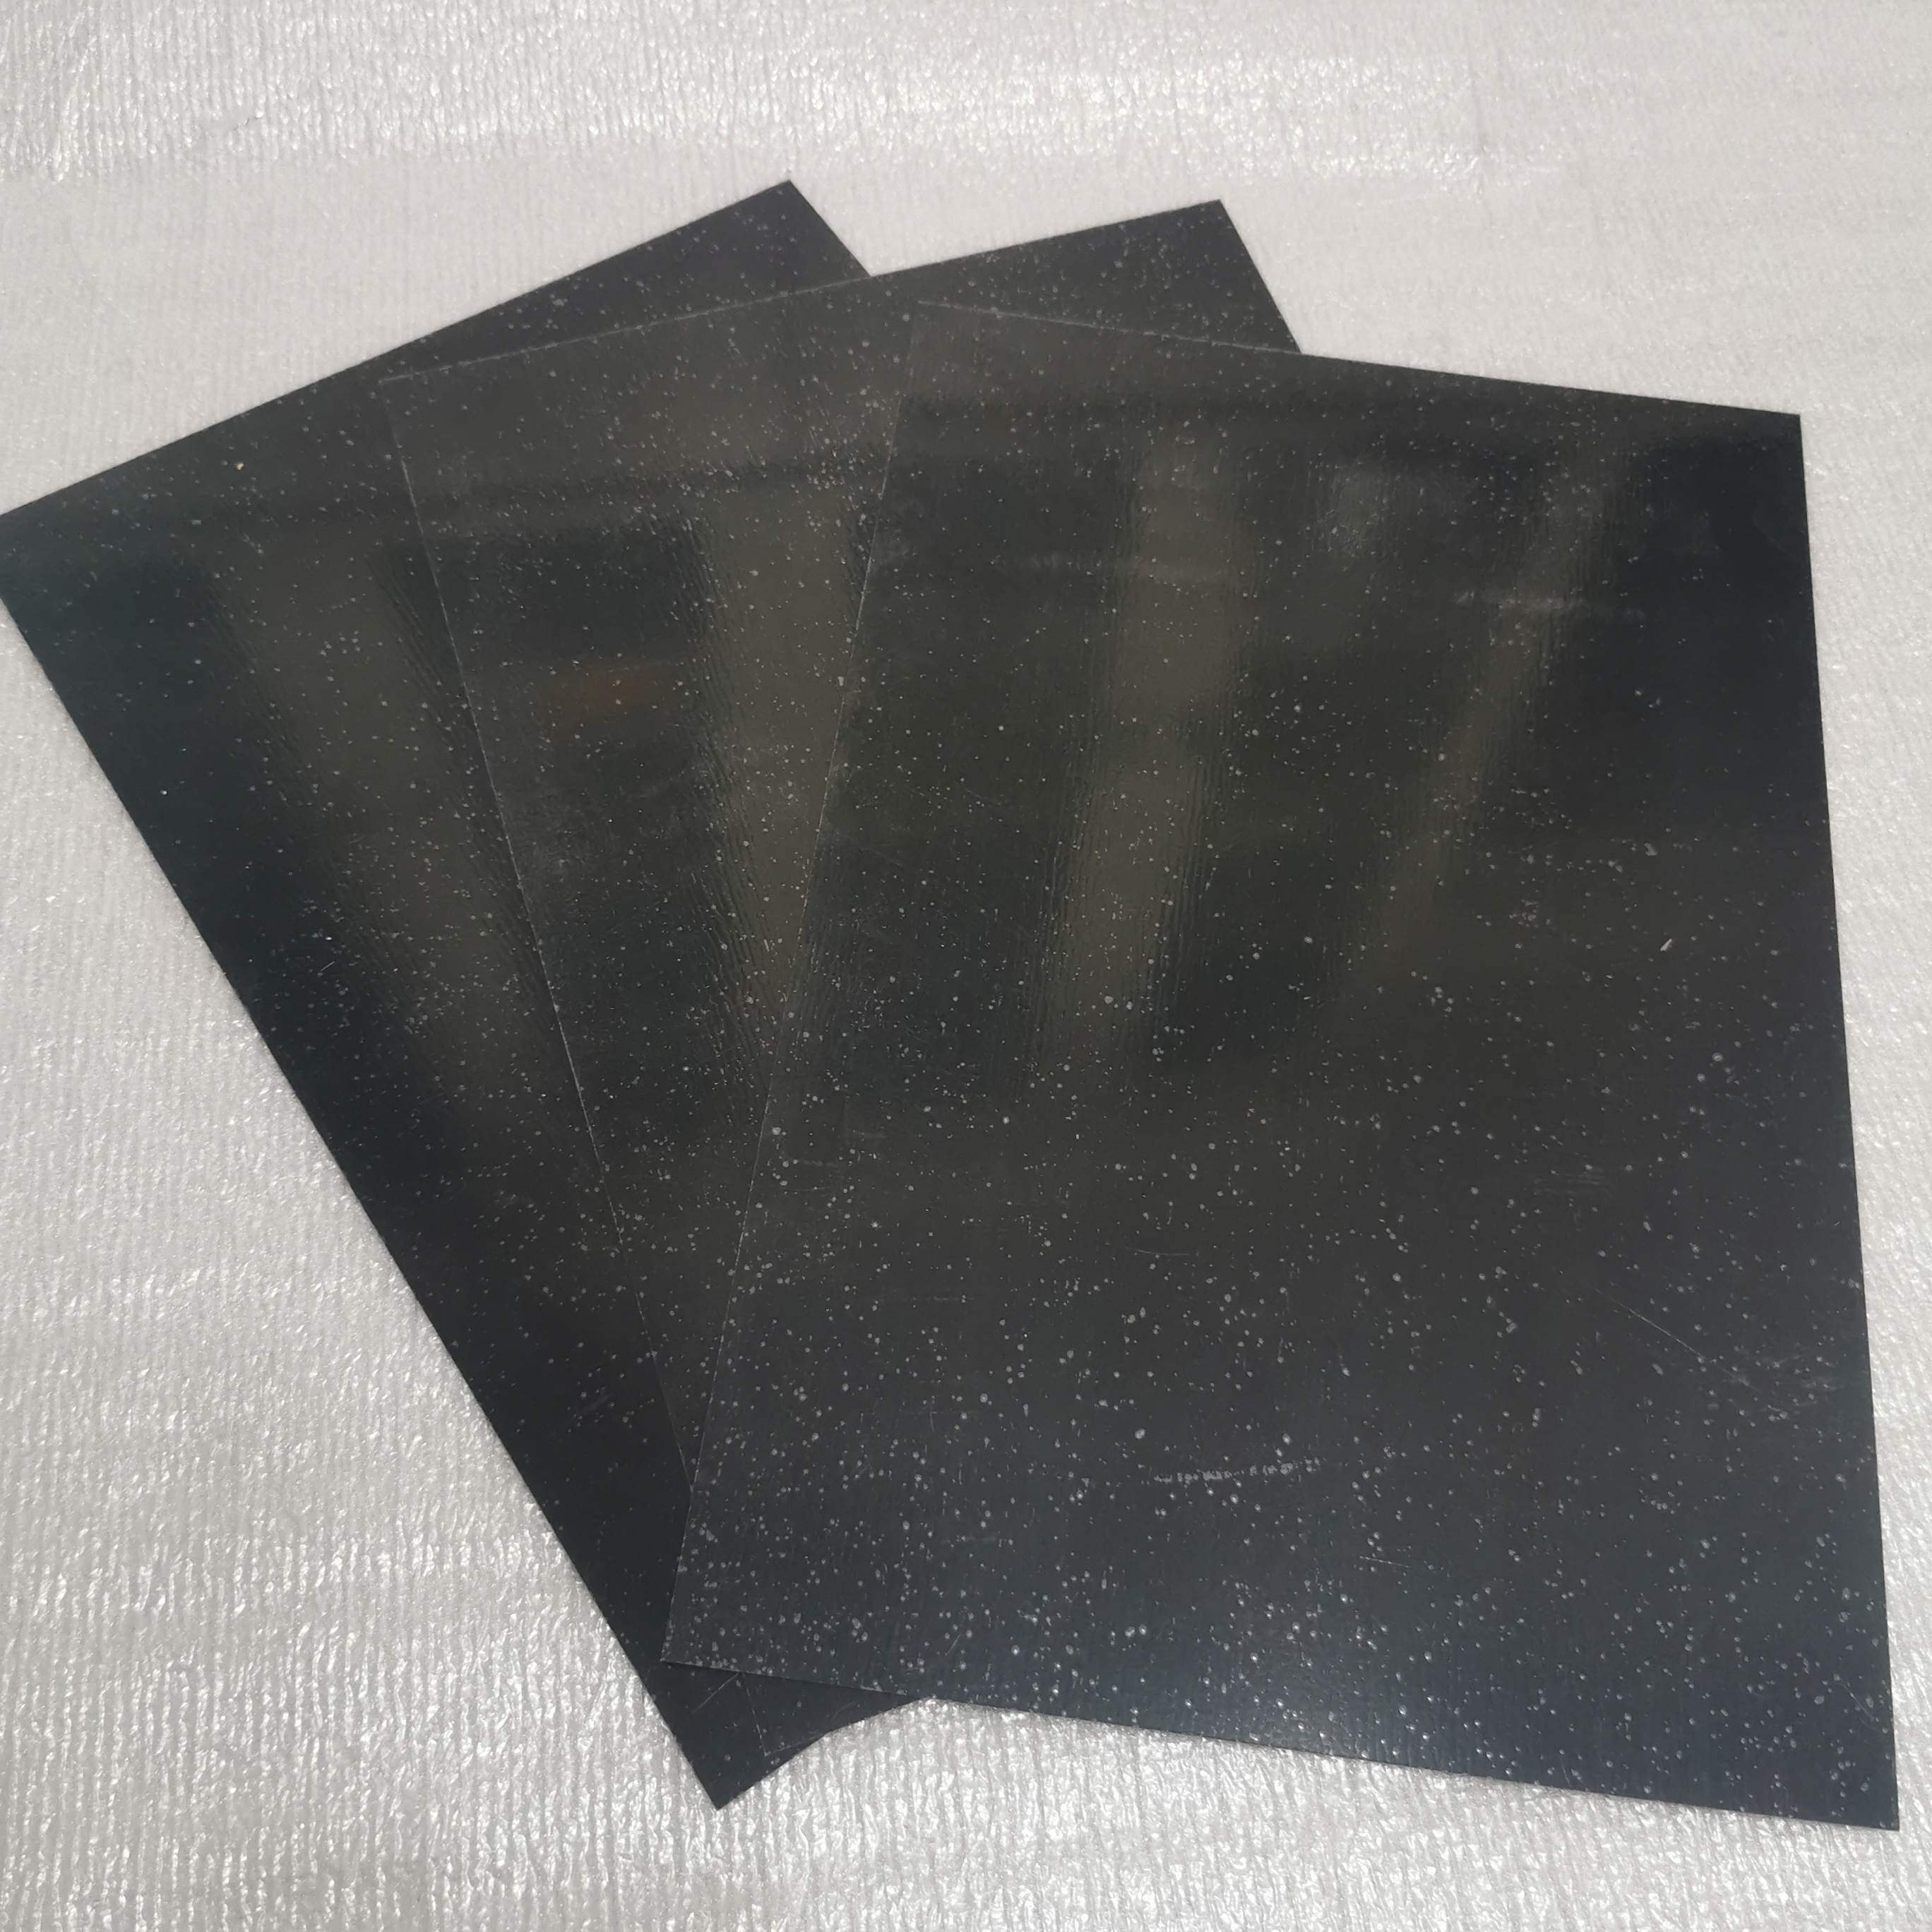 Black Glossy Finish 0.6mm HPL Post Forming Sheet Fireproof Kitchen Countertop Cabinet Door